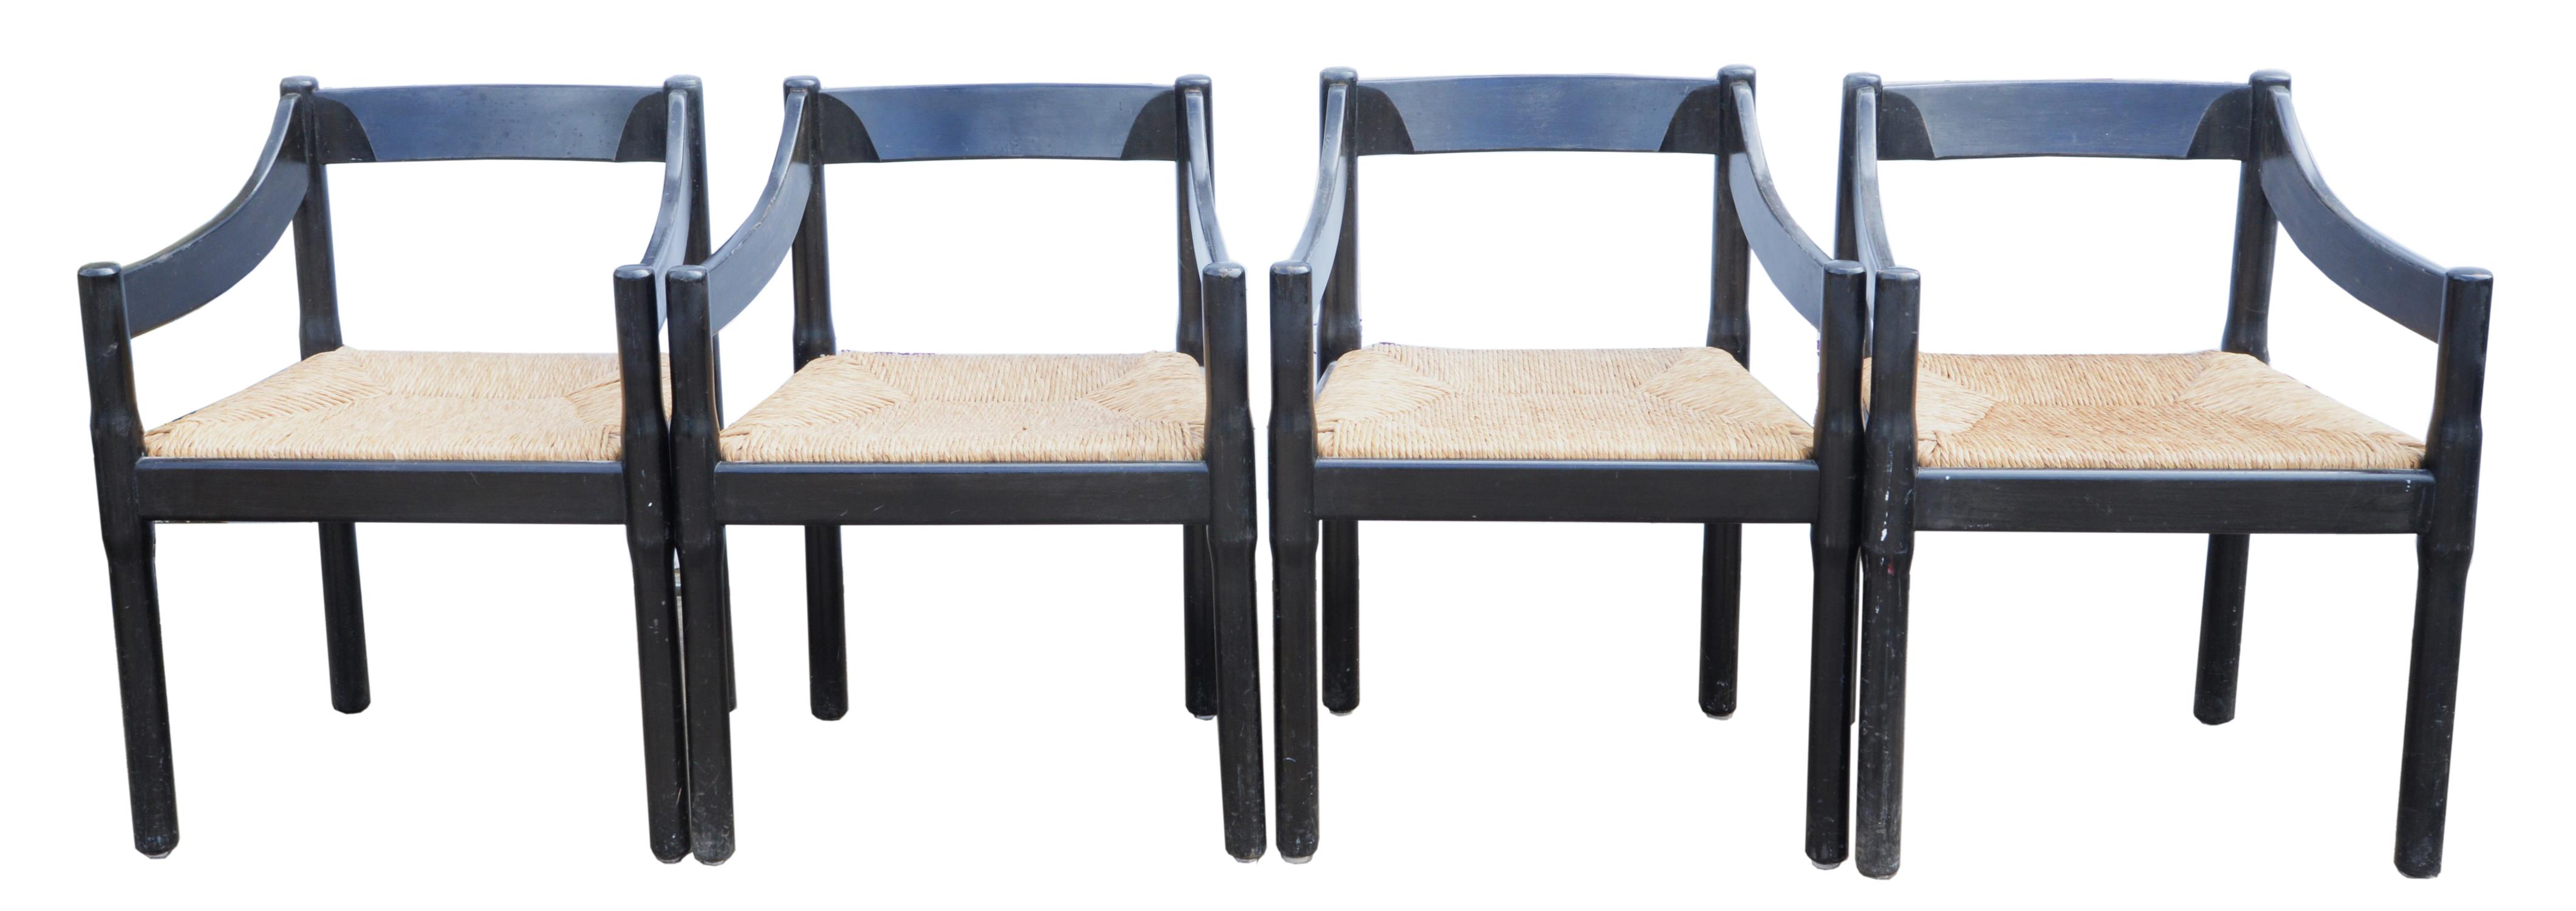 Vico Magistrelli (Italian, 1920-2006), set of four Carimate chairs, black colourway,